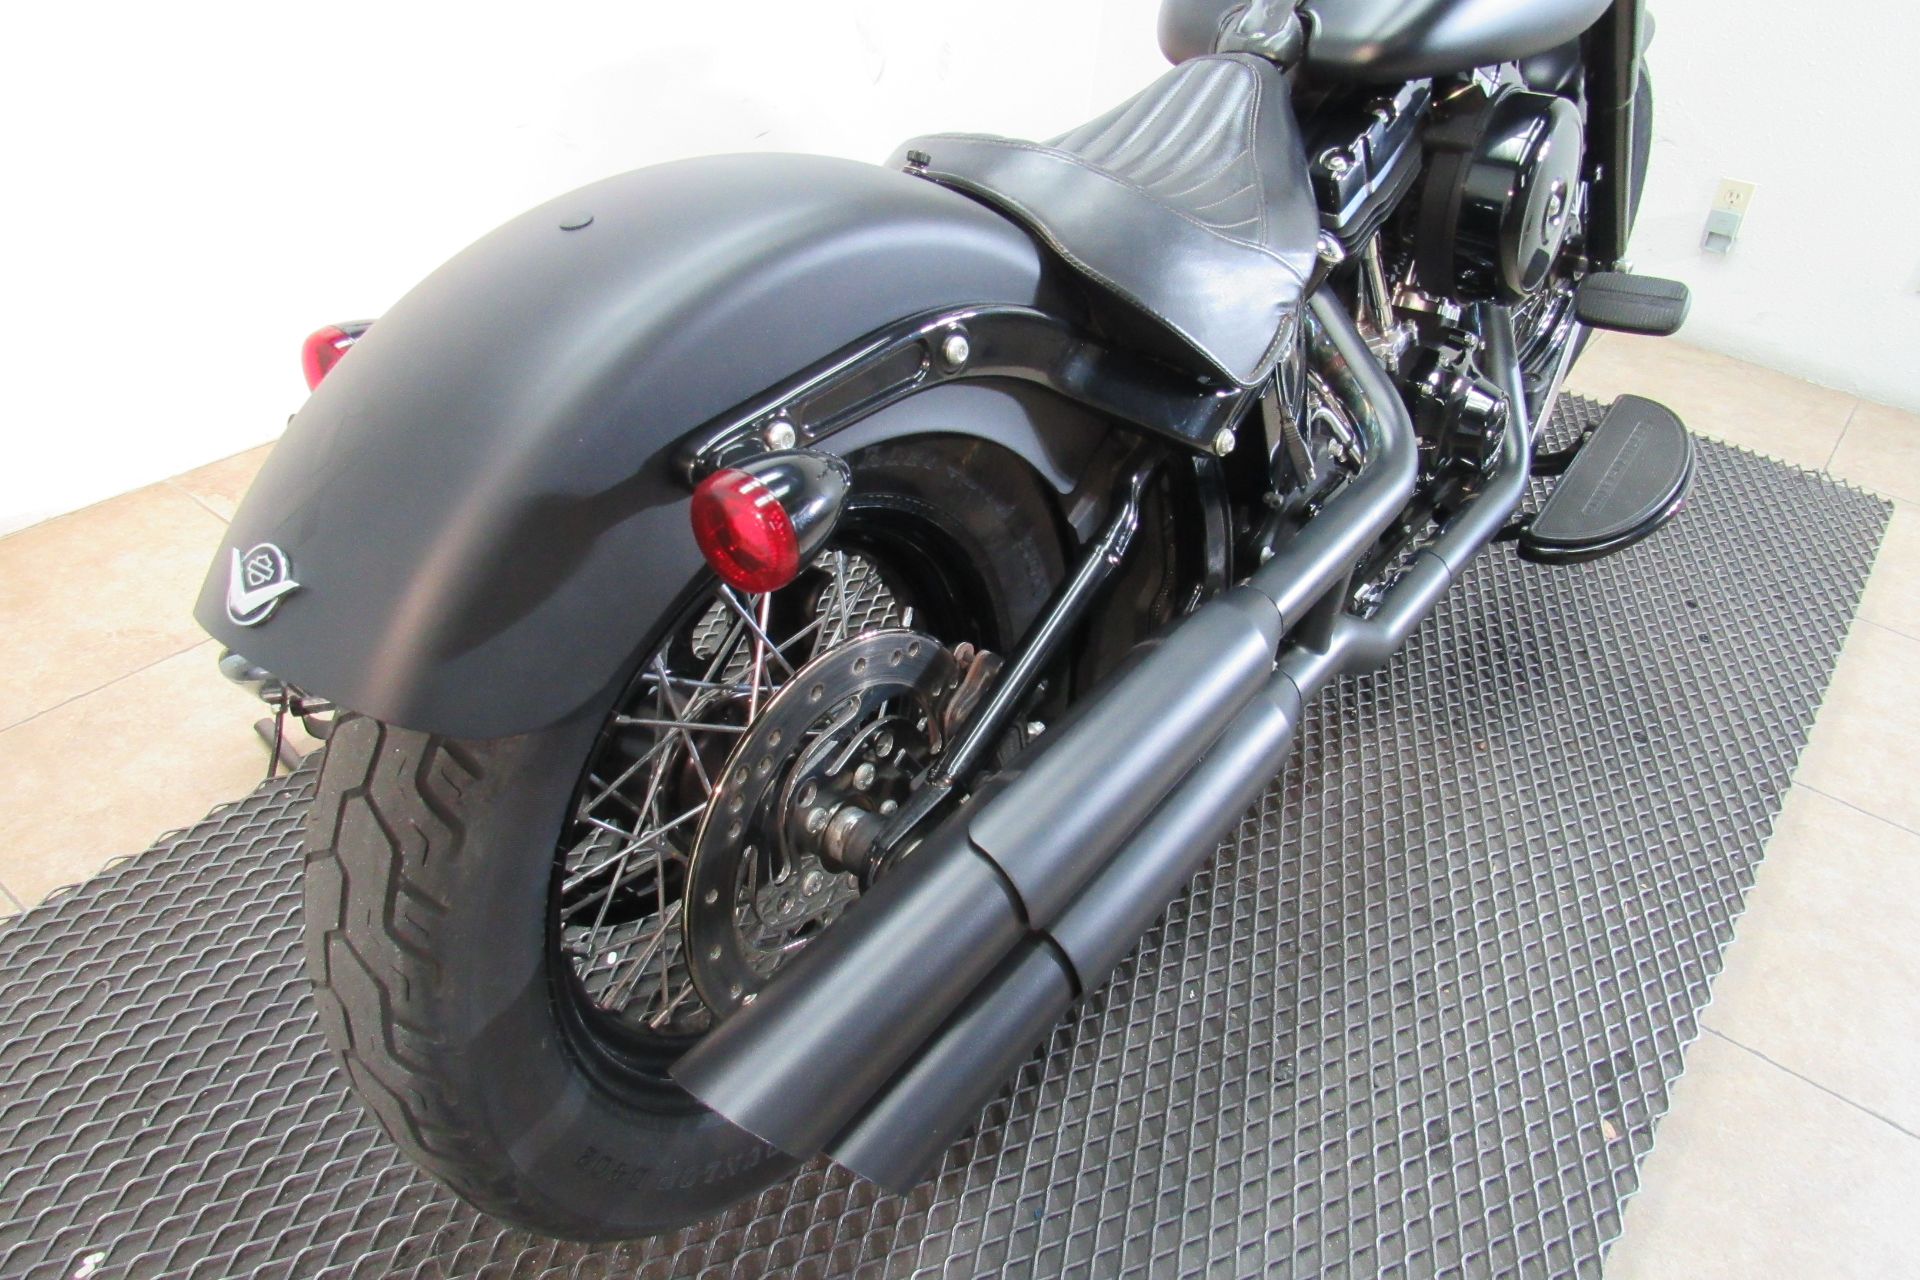 2014 Harley-Davidson Softail Slim® in Temecula, California - Photo 22